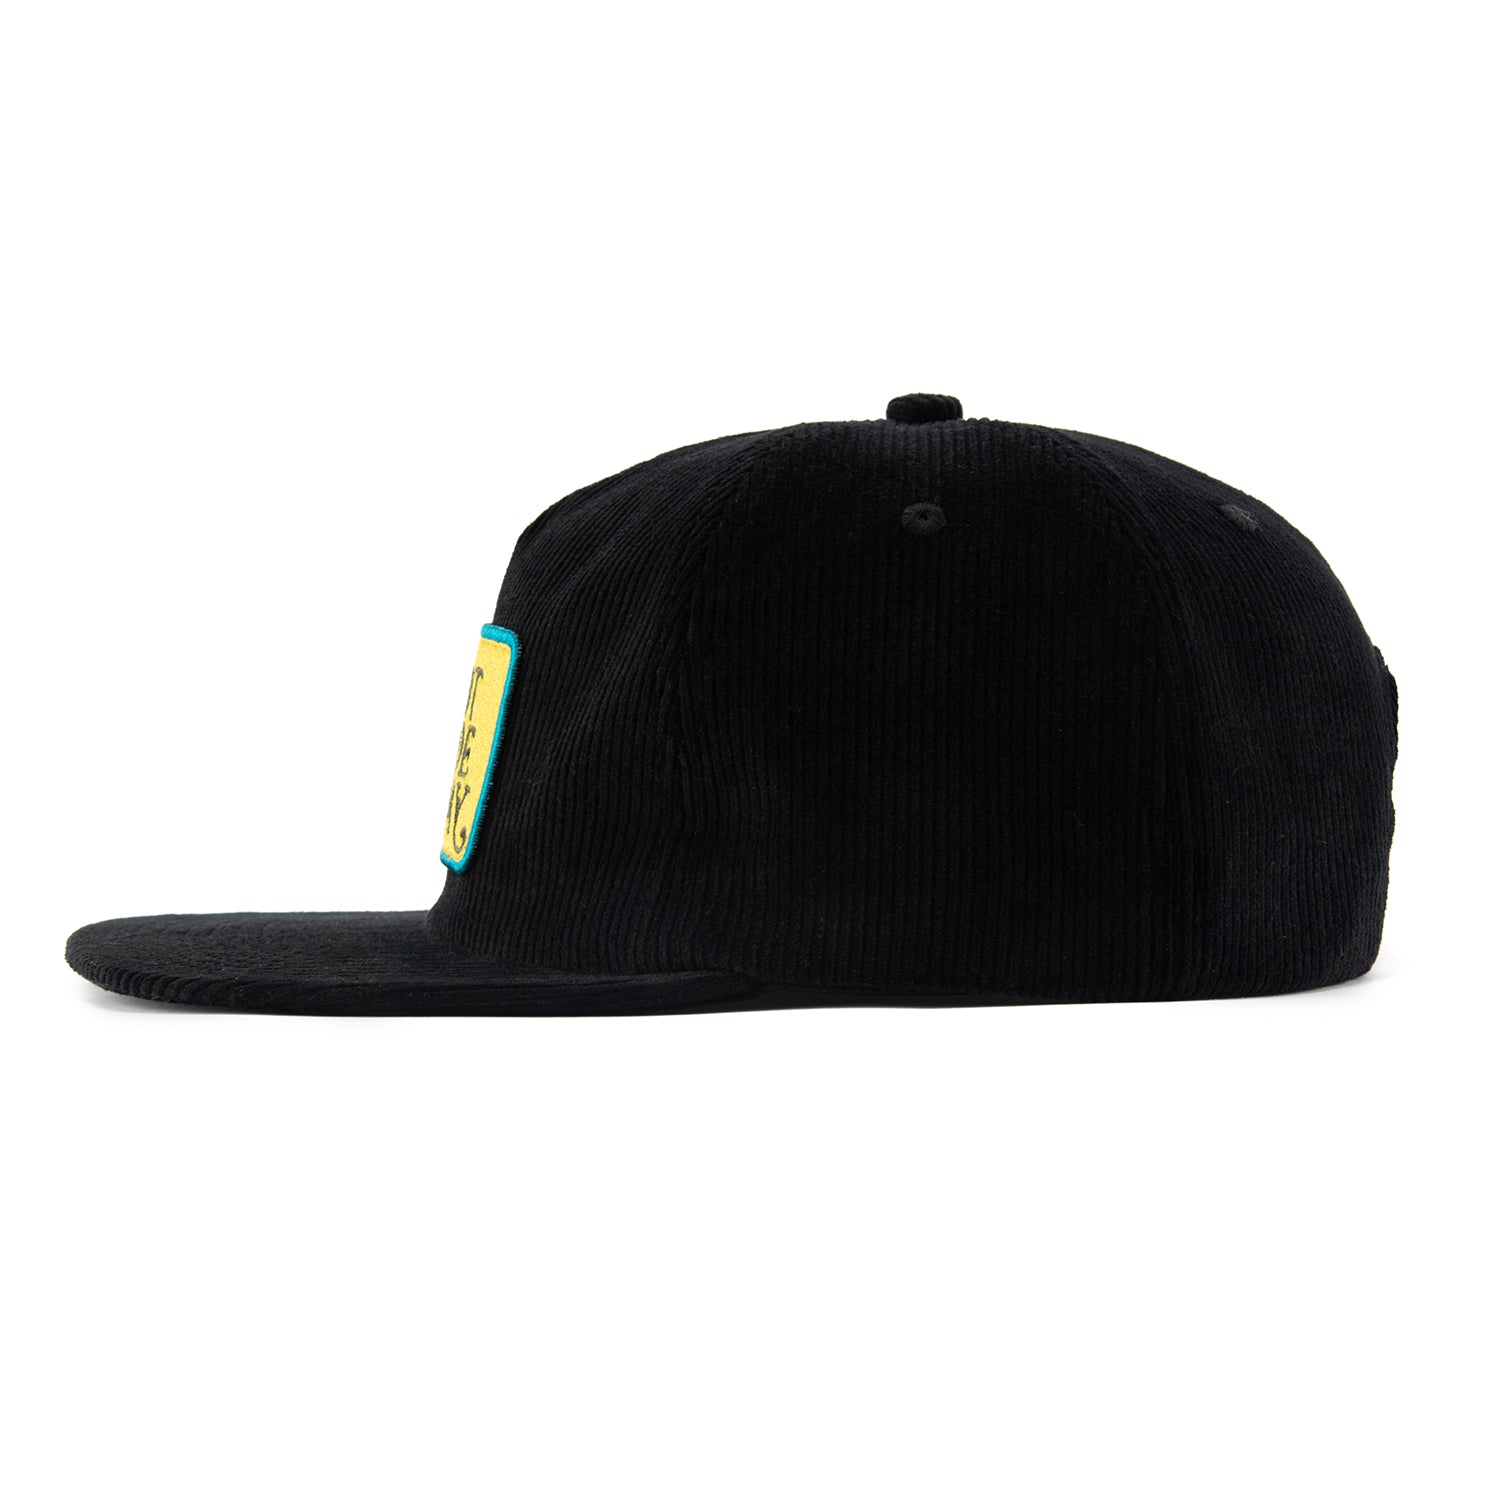 “Not Fade Away” Cord Snapback Hat by Yusuke Komori